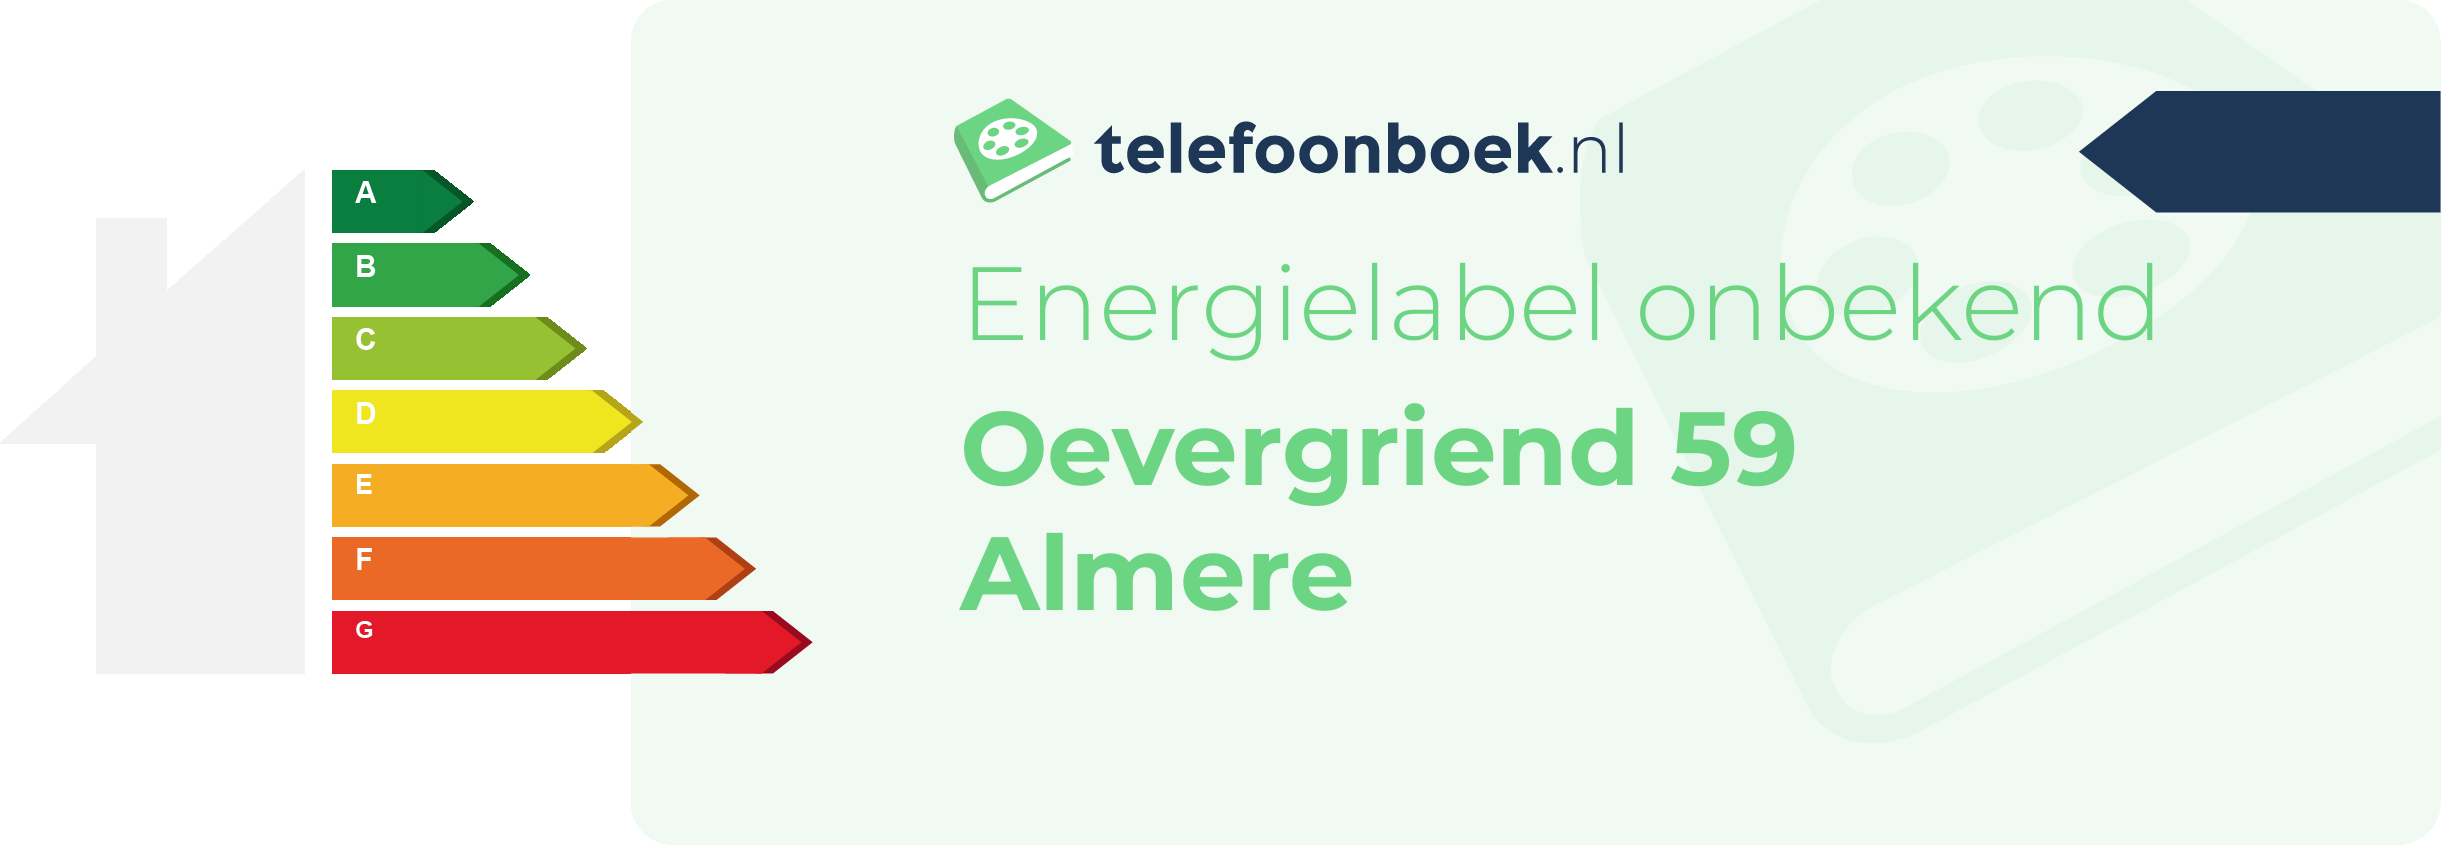 Energielabel Oevergriend 59 Almere